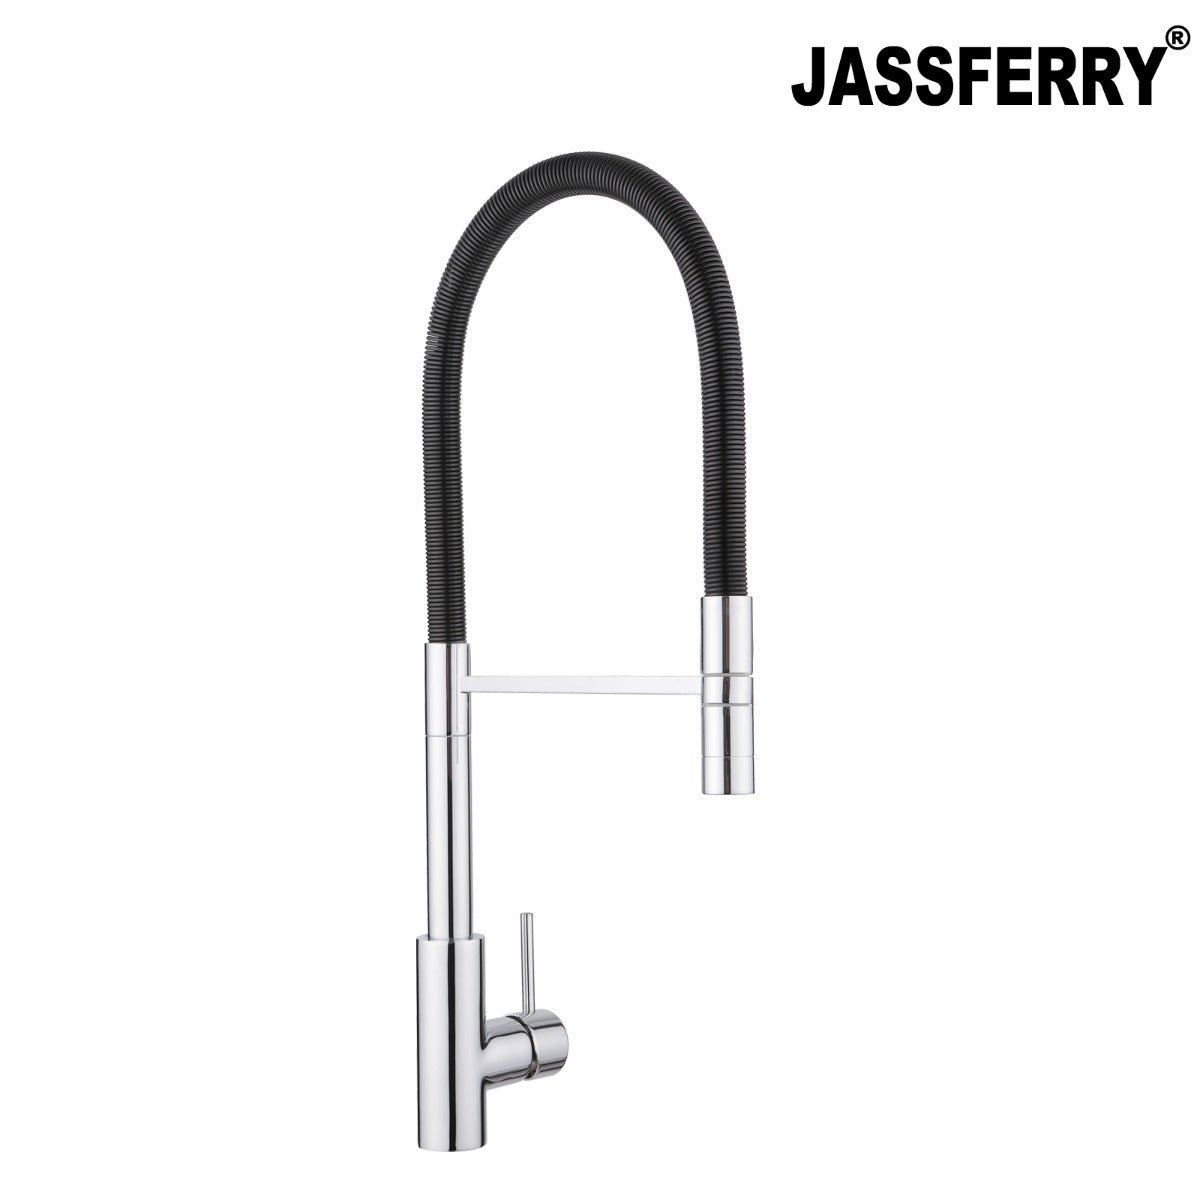 JassferryJASSFERRY Kitchen Sink Mixer Tap with Pull Out Spray Spring Swivel Spout ChromeKitchen taps